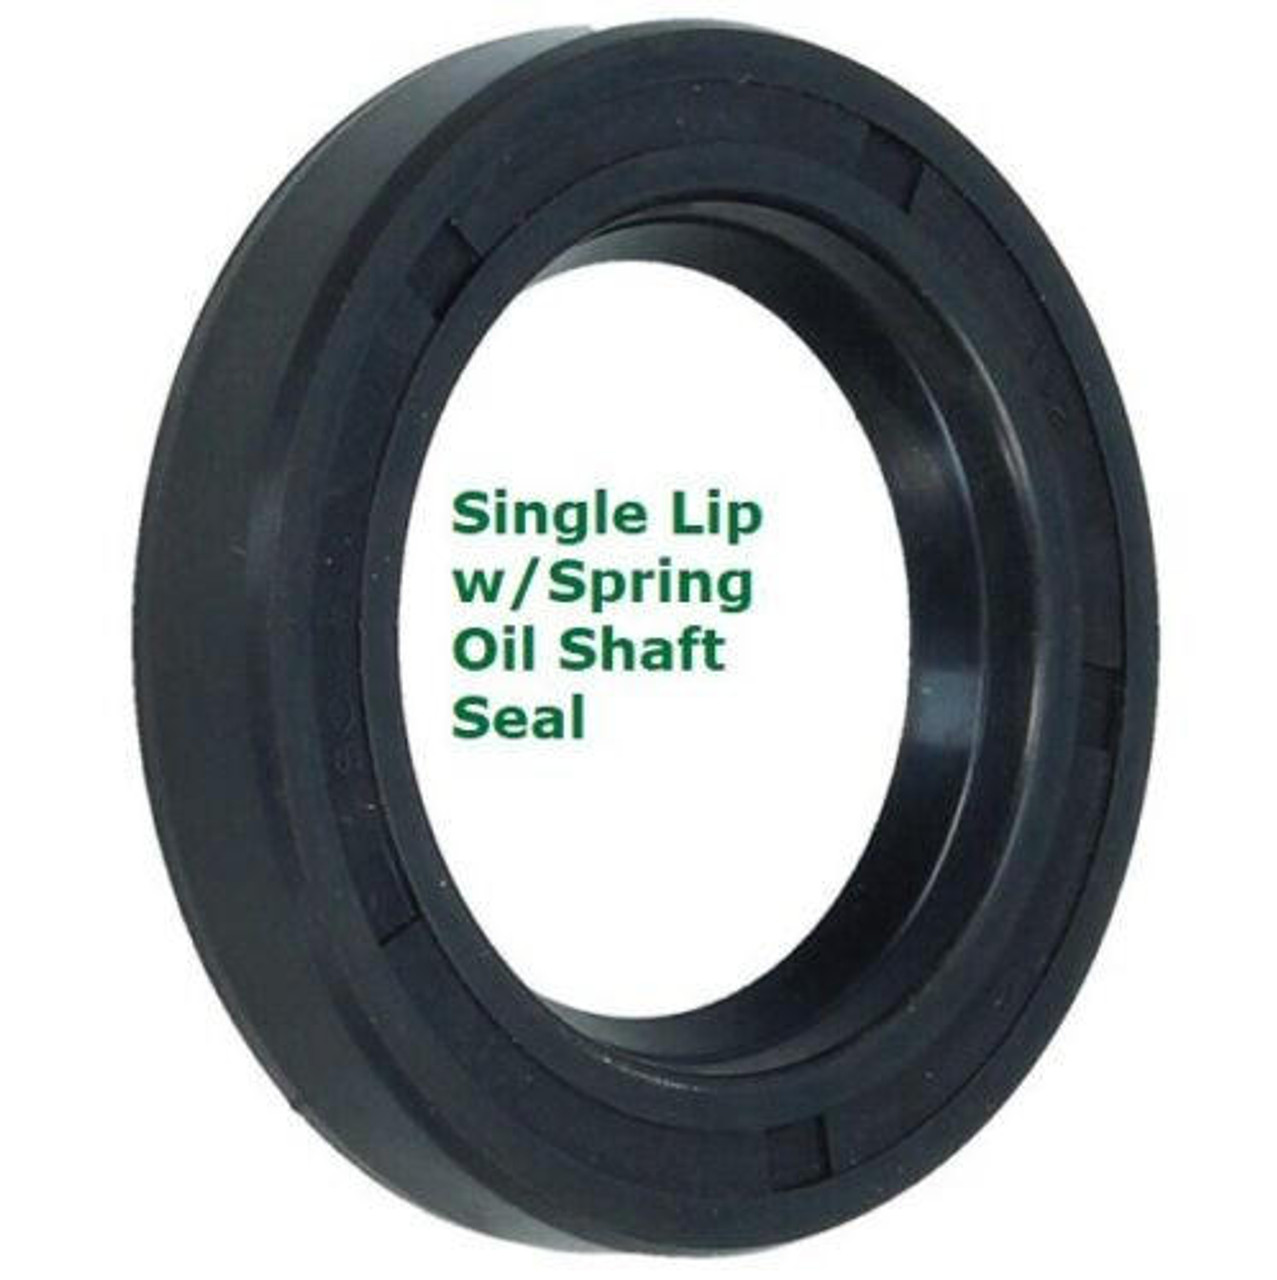 Metric Oil Shaft Seal 75 x 95 x 10mm Single Lip   Price for 1 pc